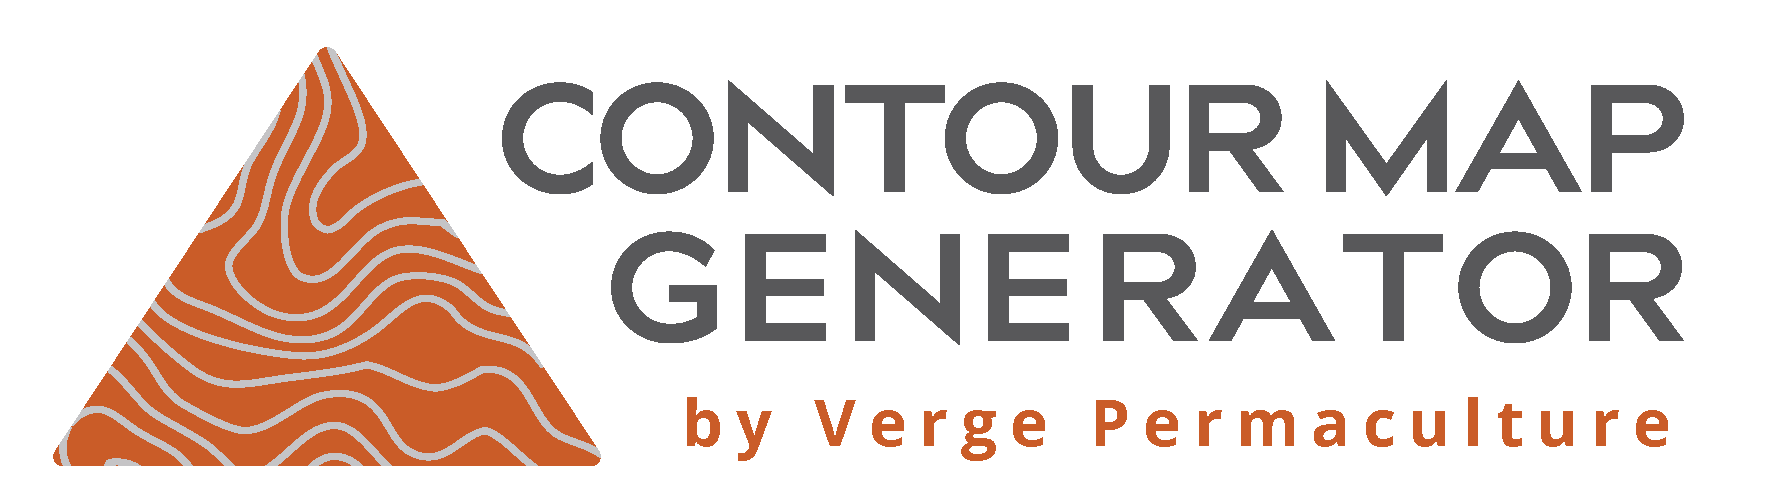 >Verge Permaculture Contour Map Regenerative Land Design Mapping Tool Logo